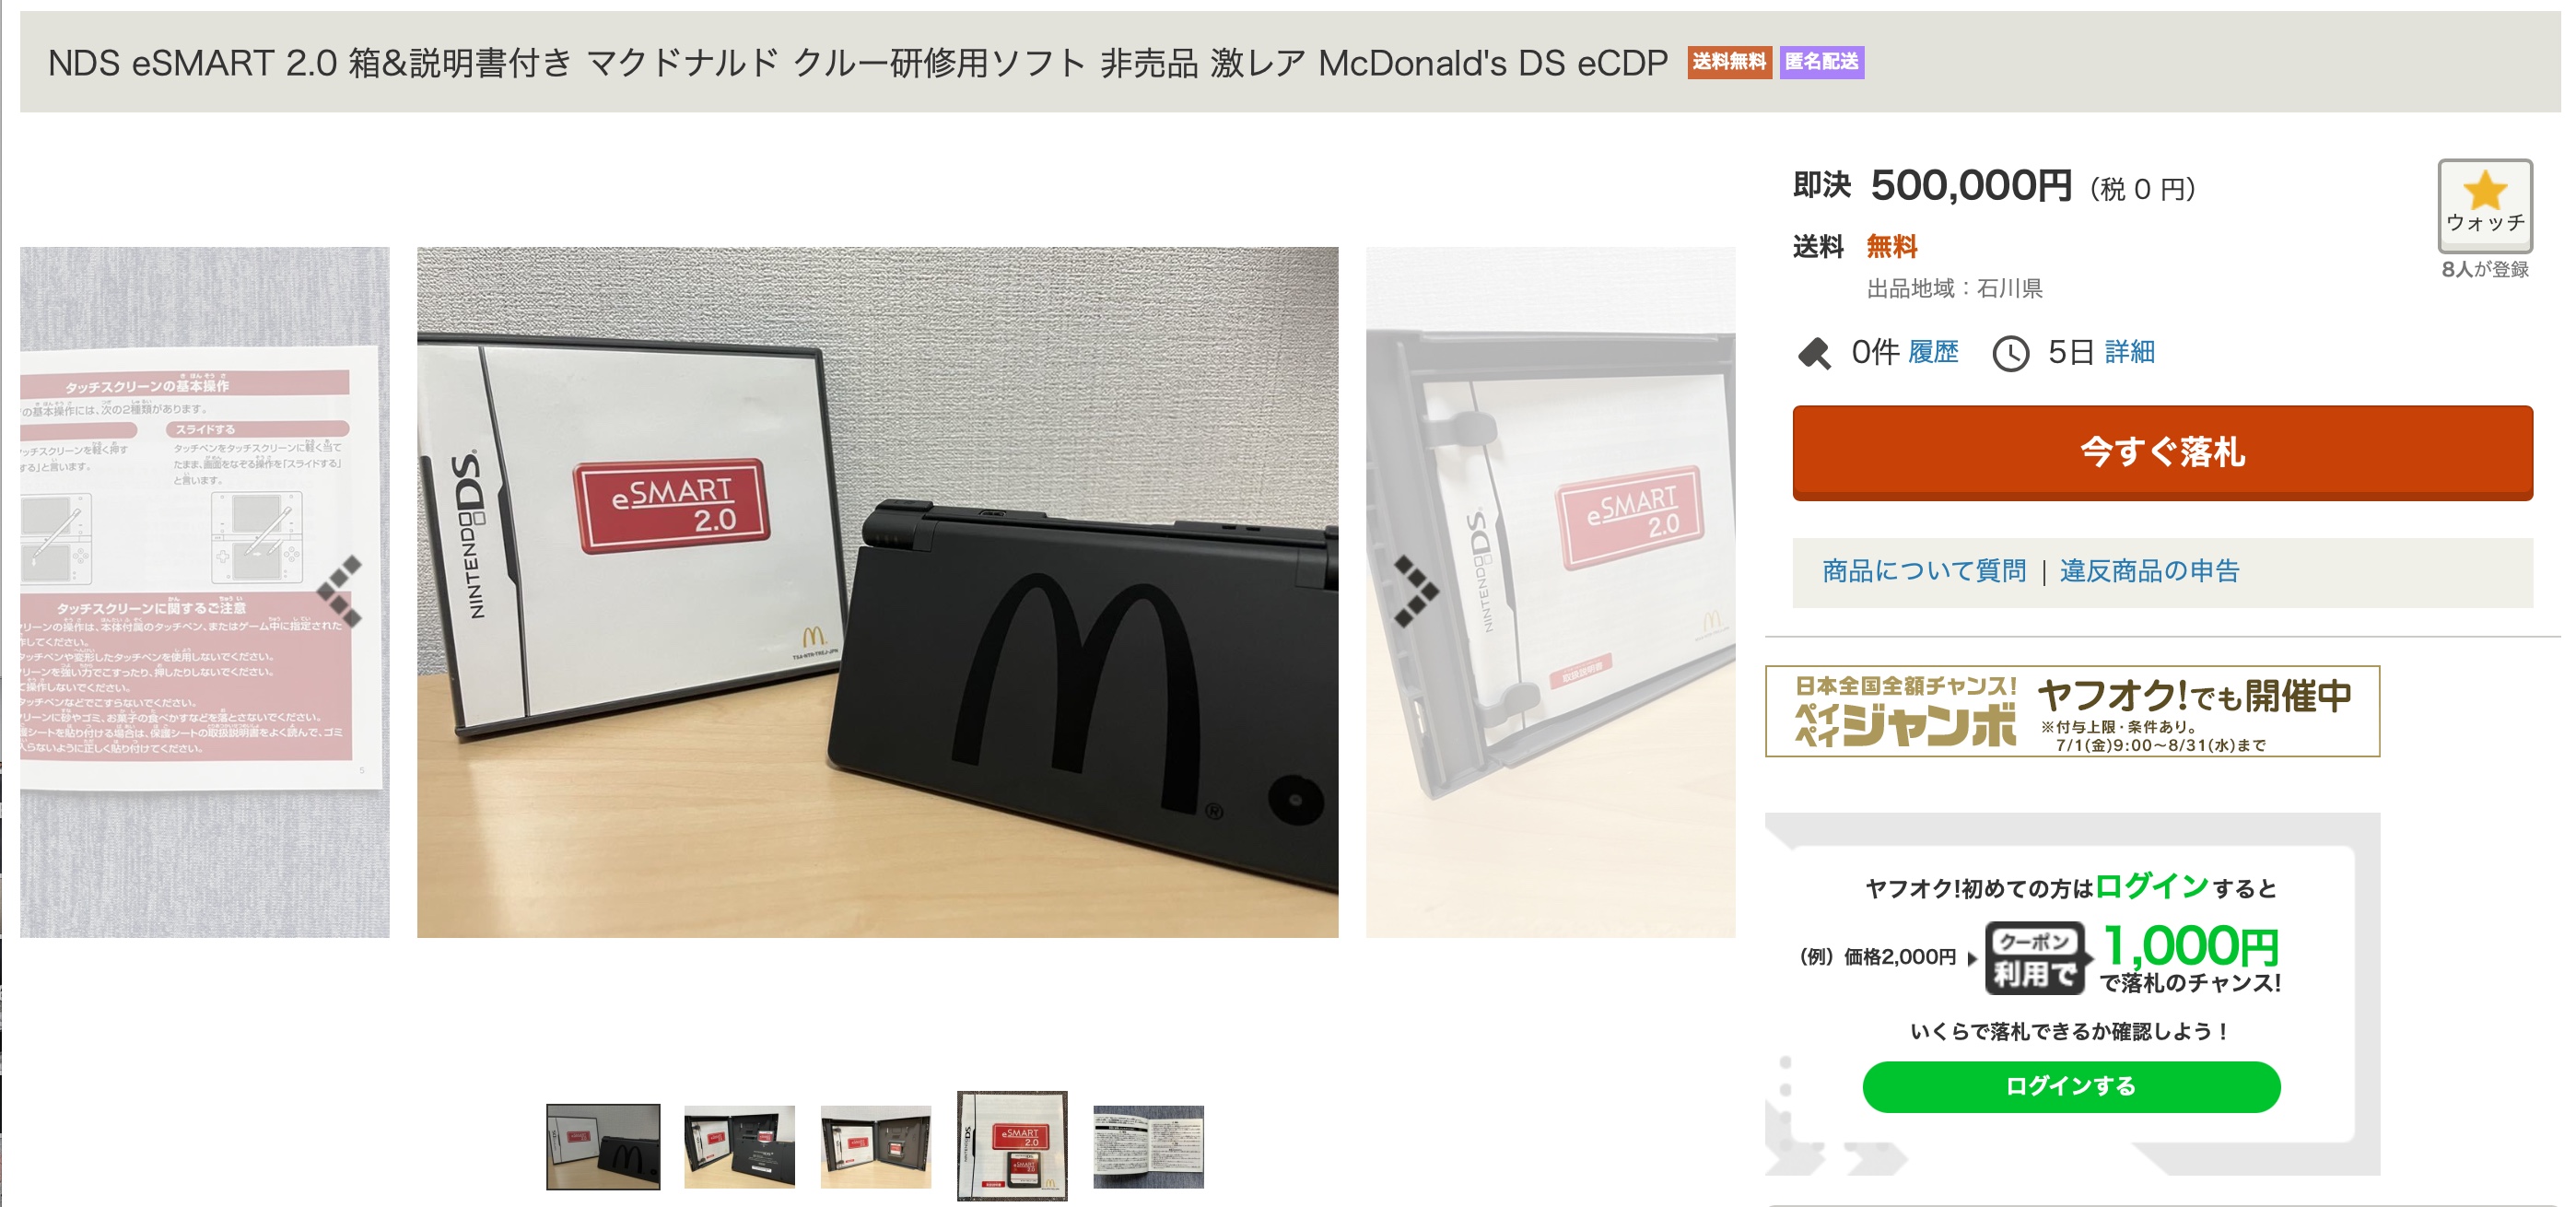 Nintendo DSi McDonald’s